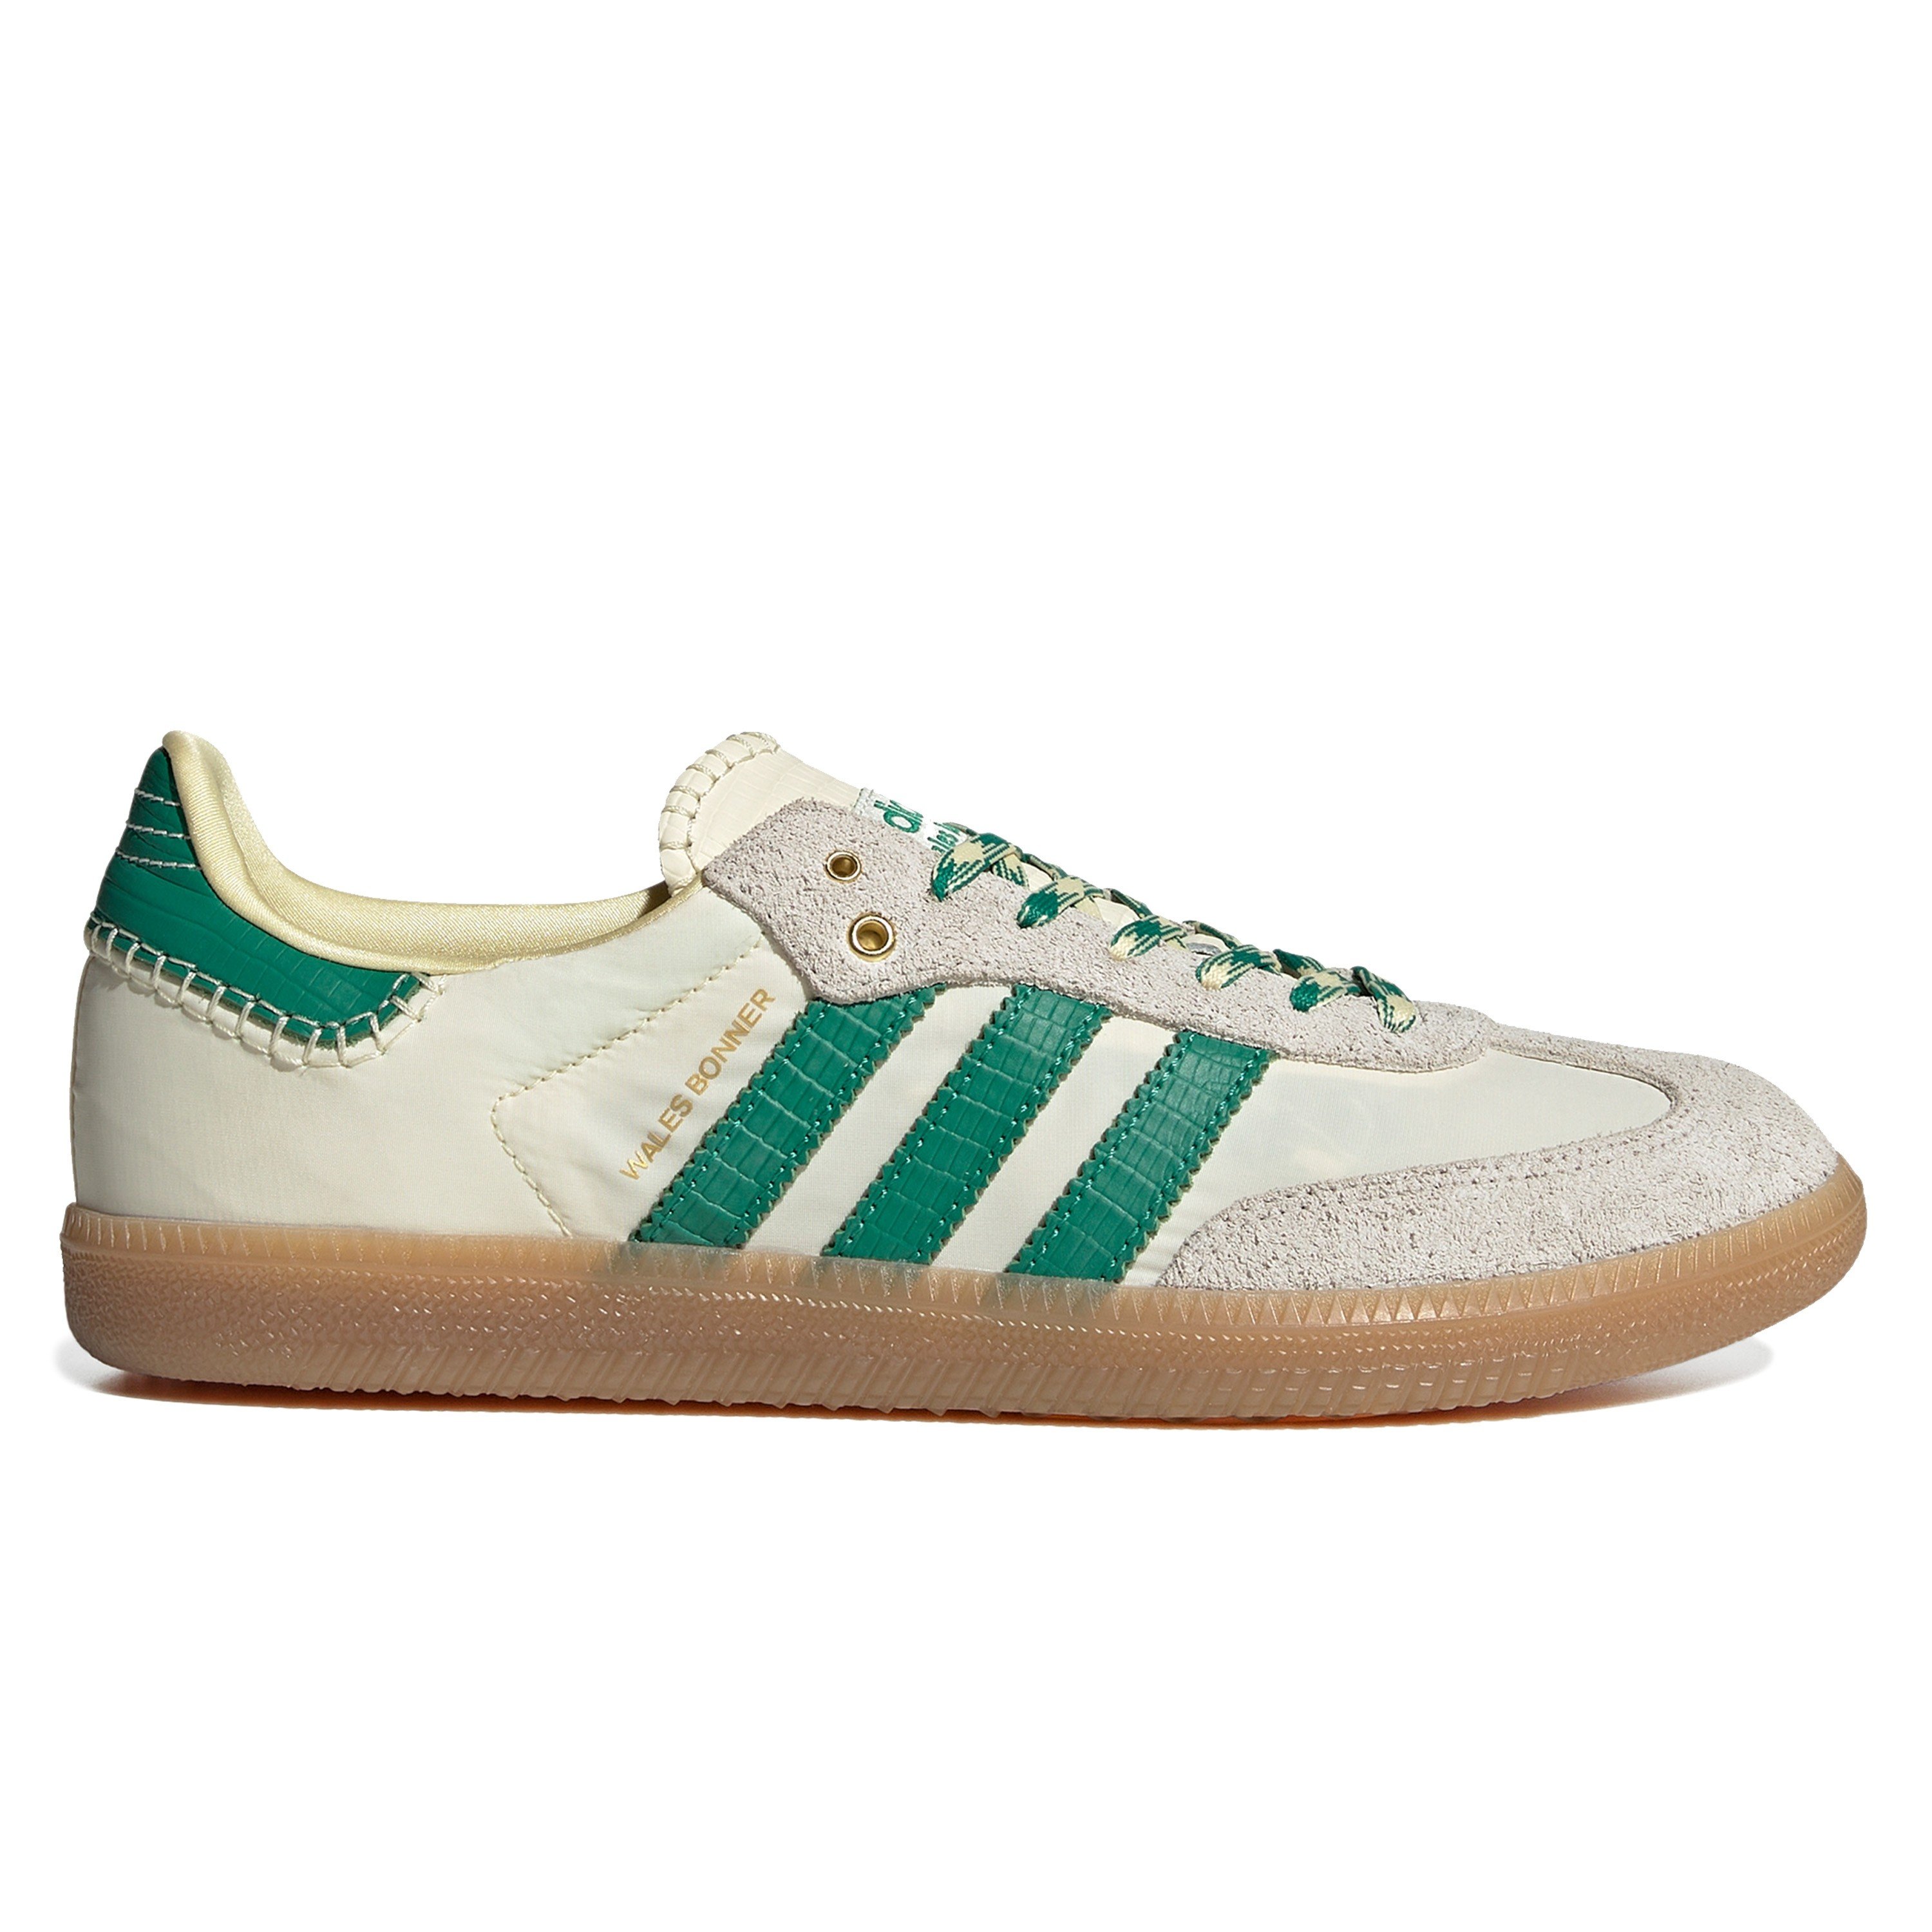 adidas Originals by Wales Bonner Samba WB (Cream White/Bold Green/Easy ...